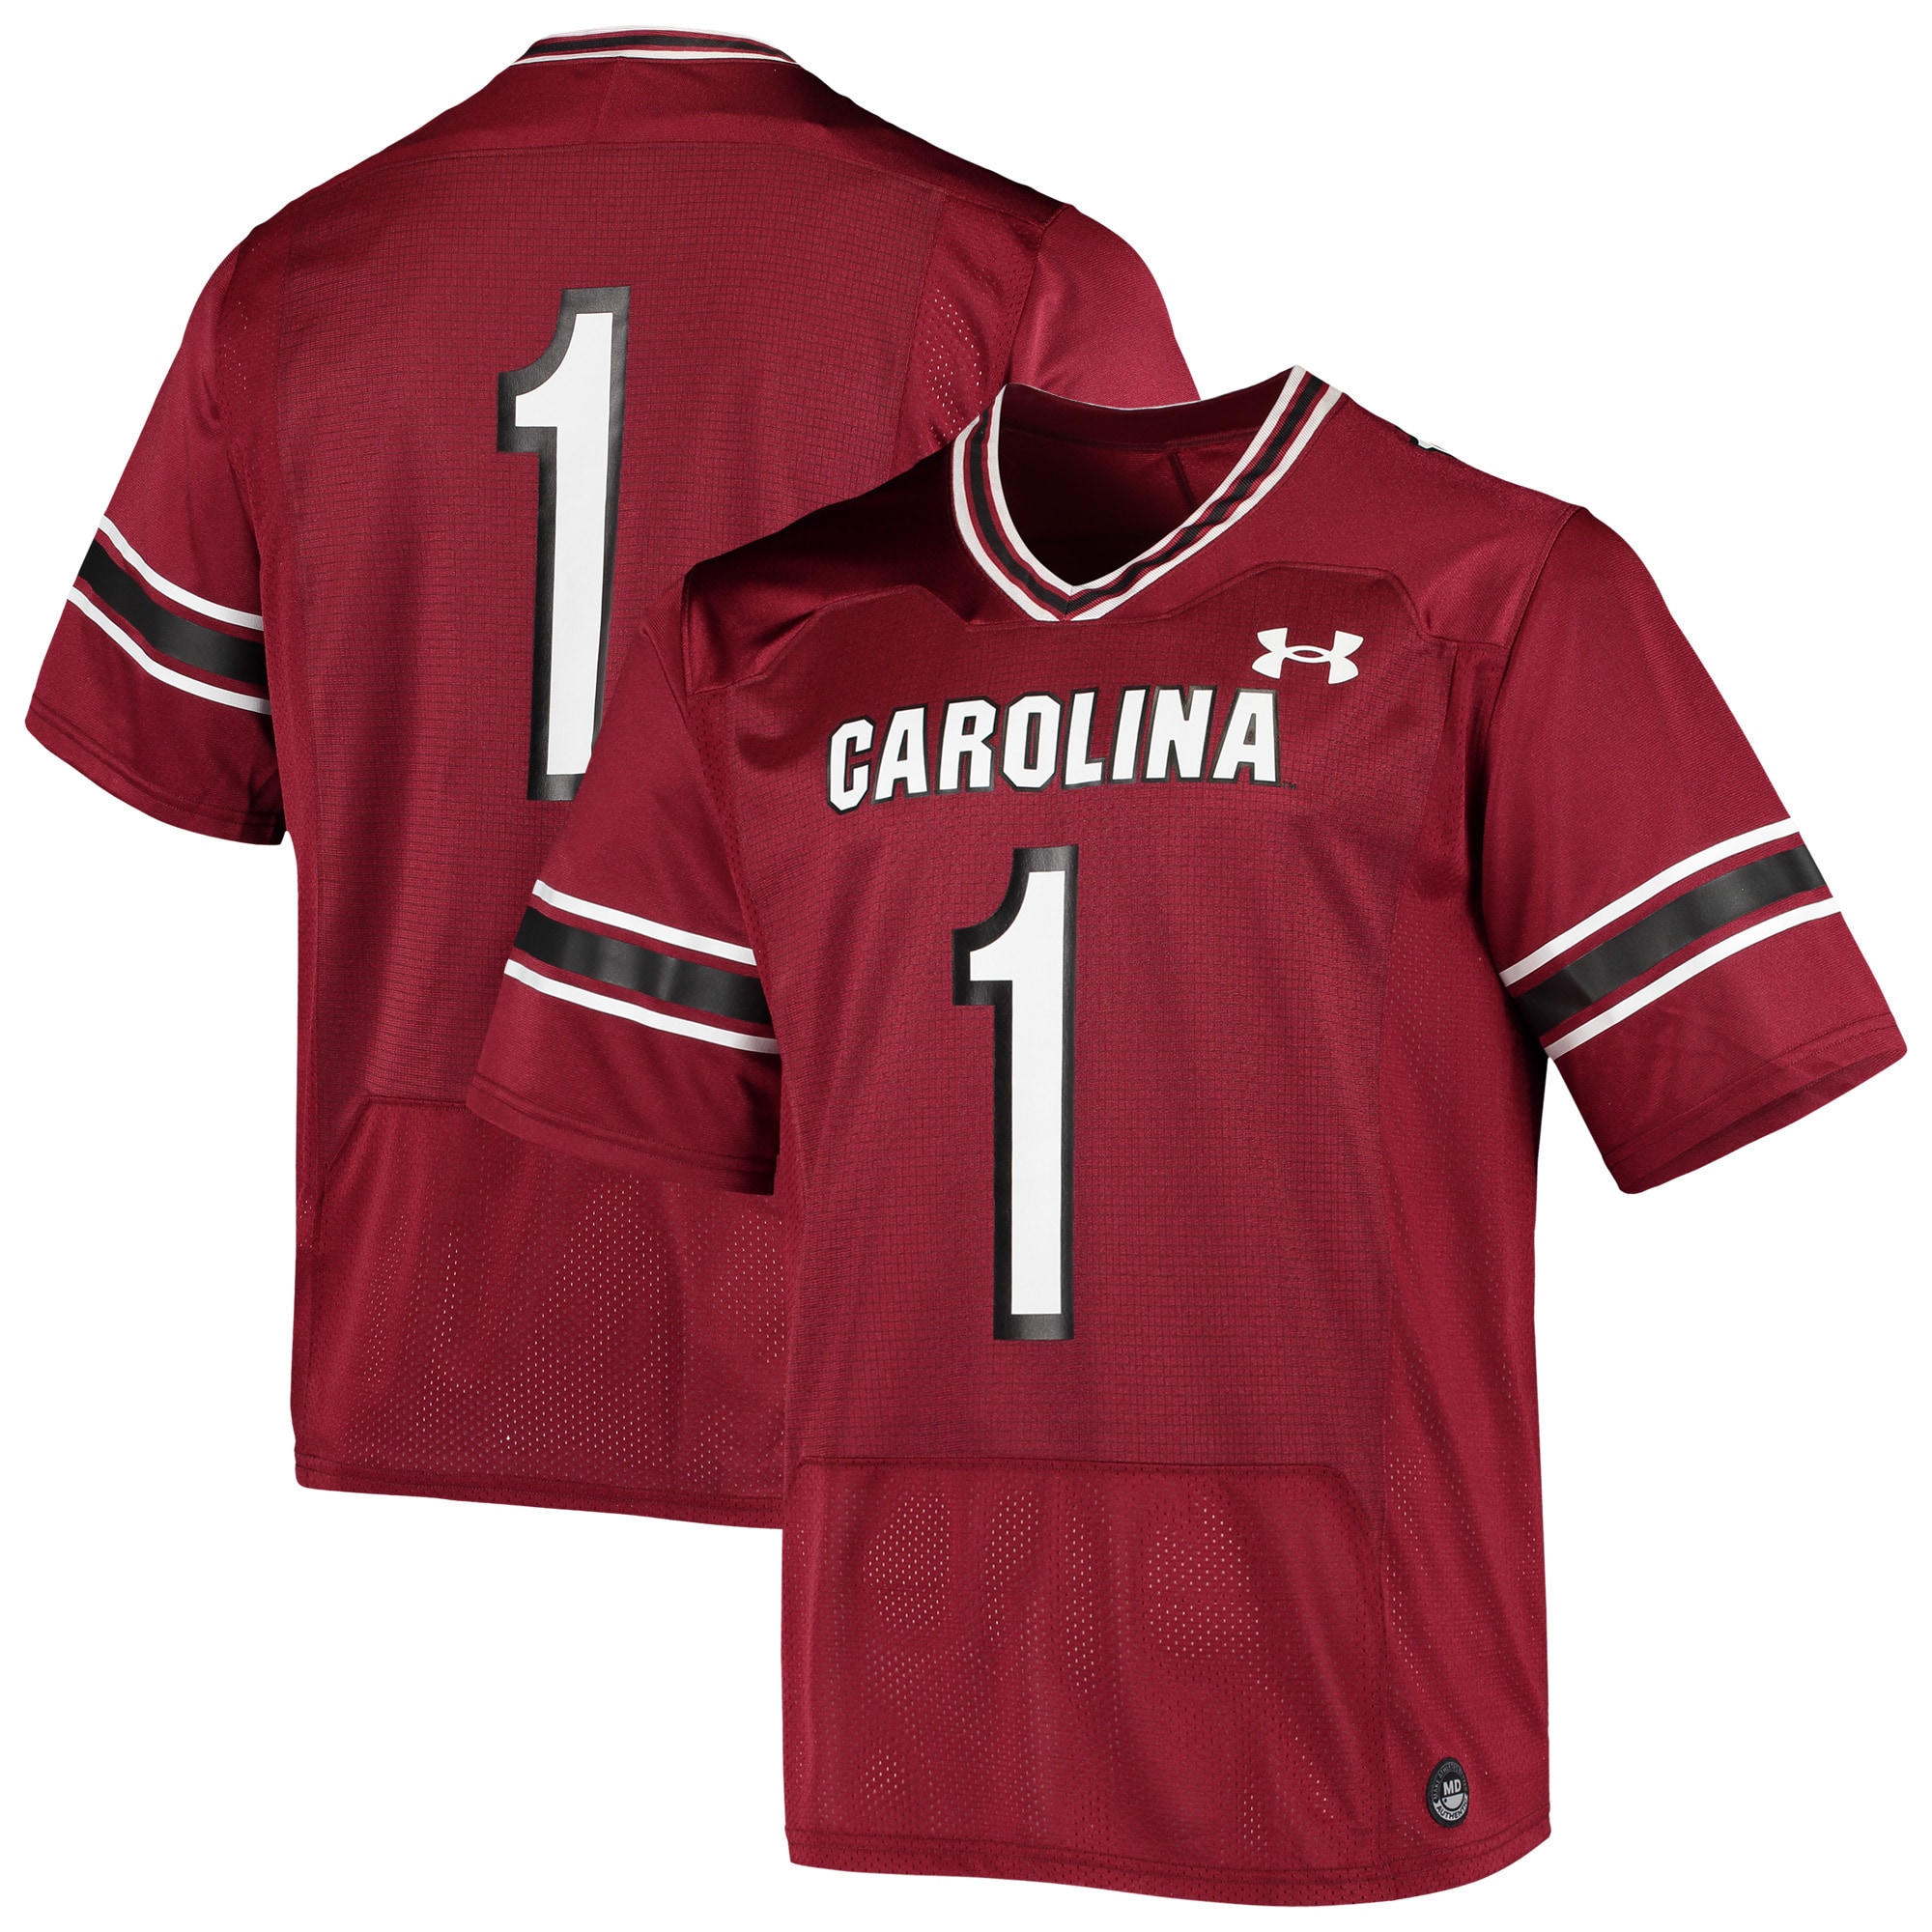 #1 South Carolina Gamecocks Under Armour Logo Replica  Football Shirts Jersey - Garnet For Youth Women Men